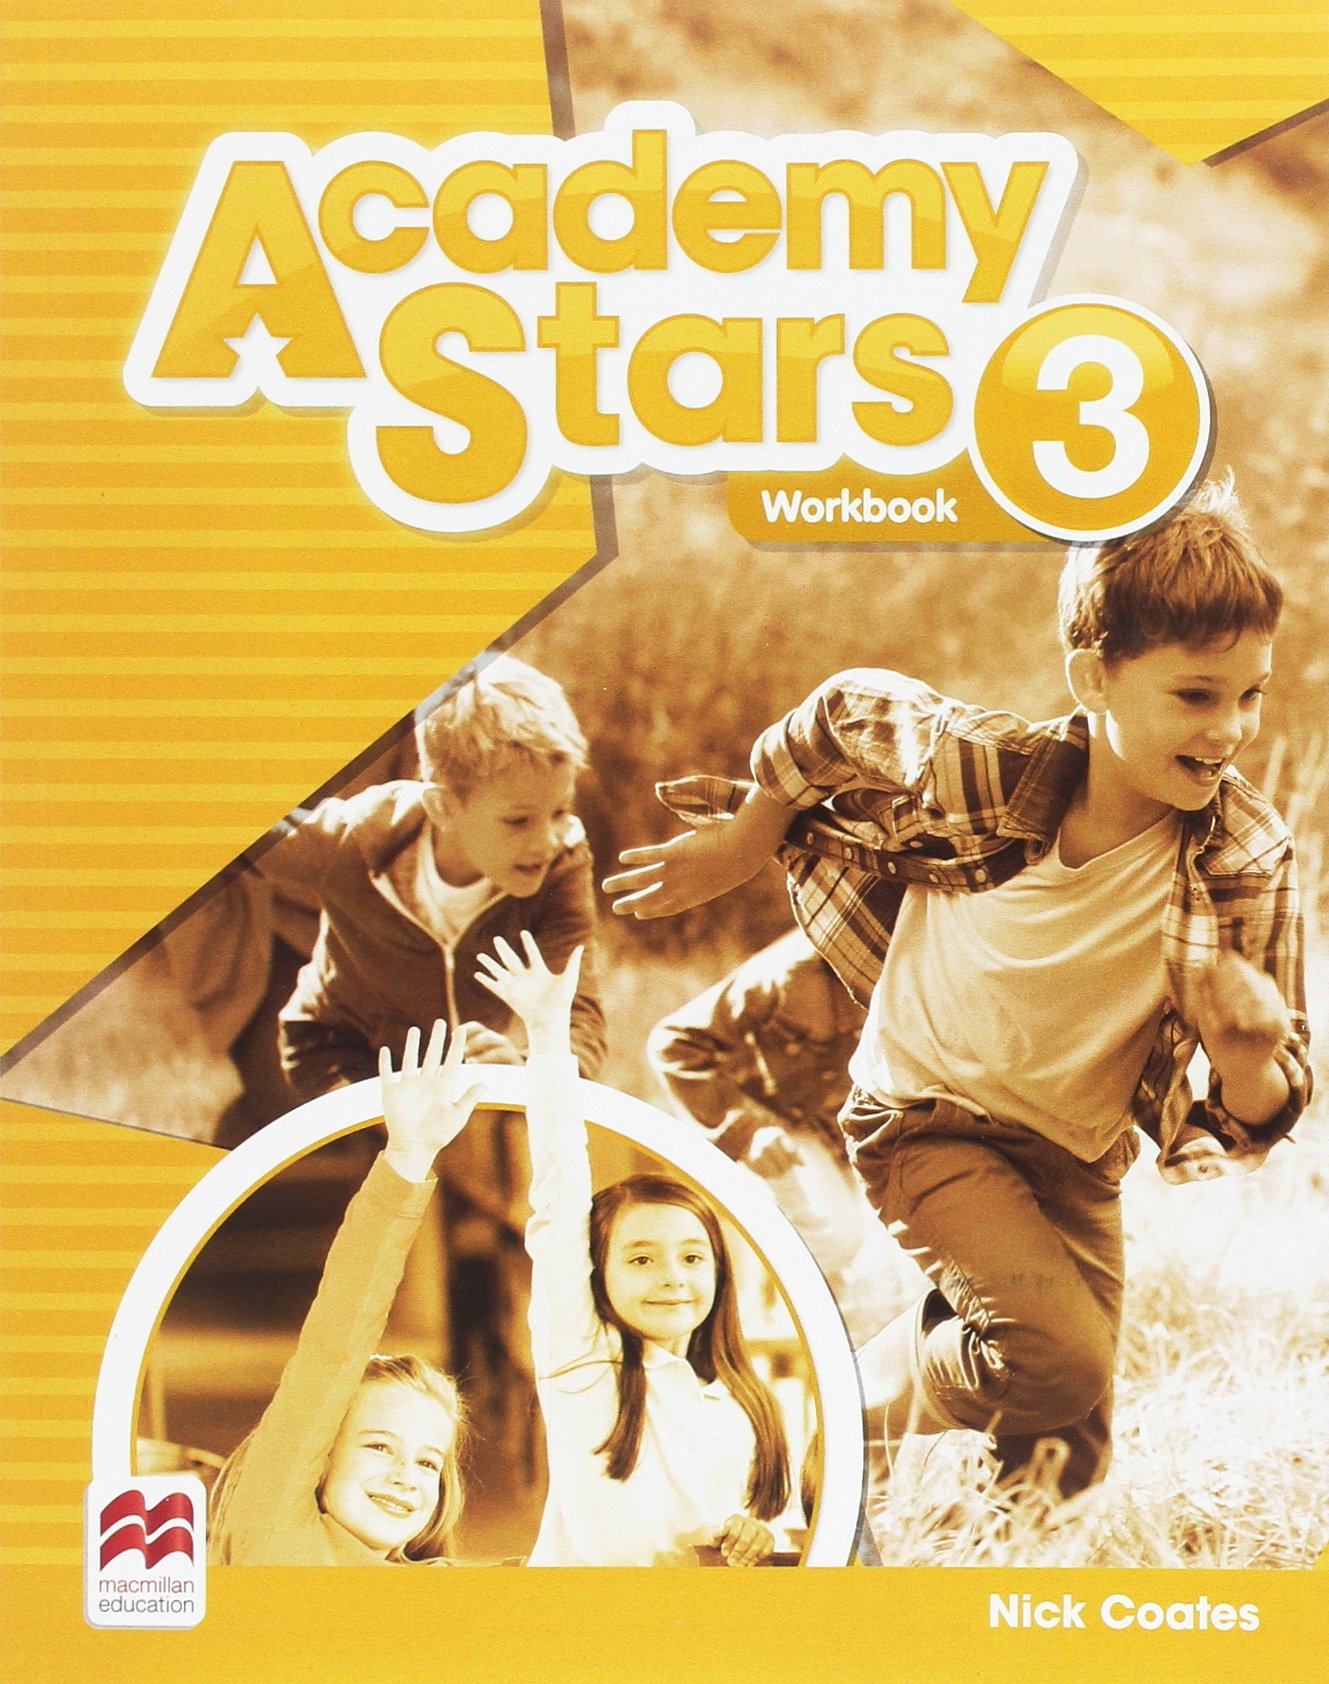 Academy starts. Academy Stars 3 pupils book. Academy Stars 2 pupil's book и Workbook. Рабочая тетрадь Academy Stars Workbook. Academy Stars 1 pupil's book и Workbook.